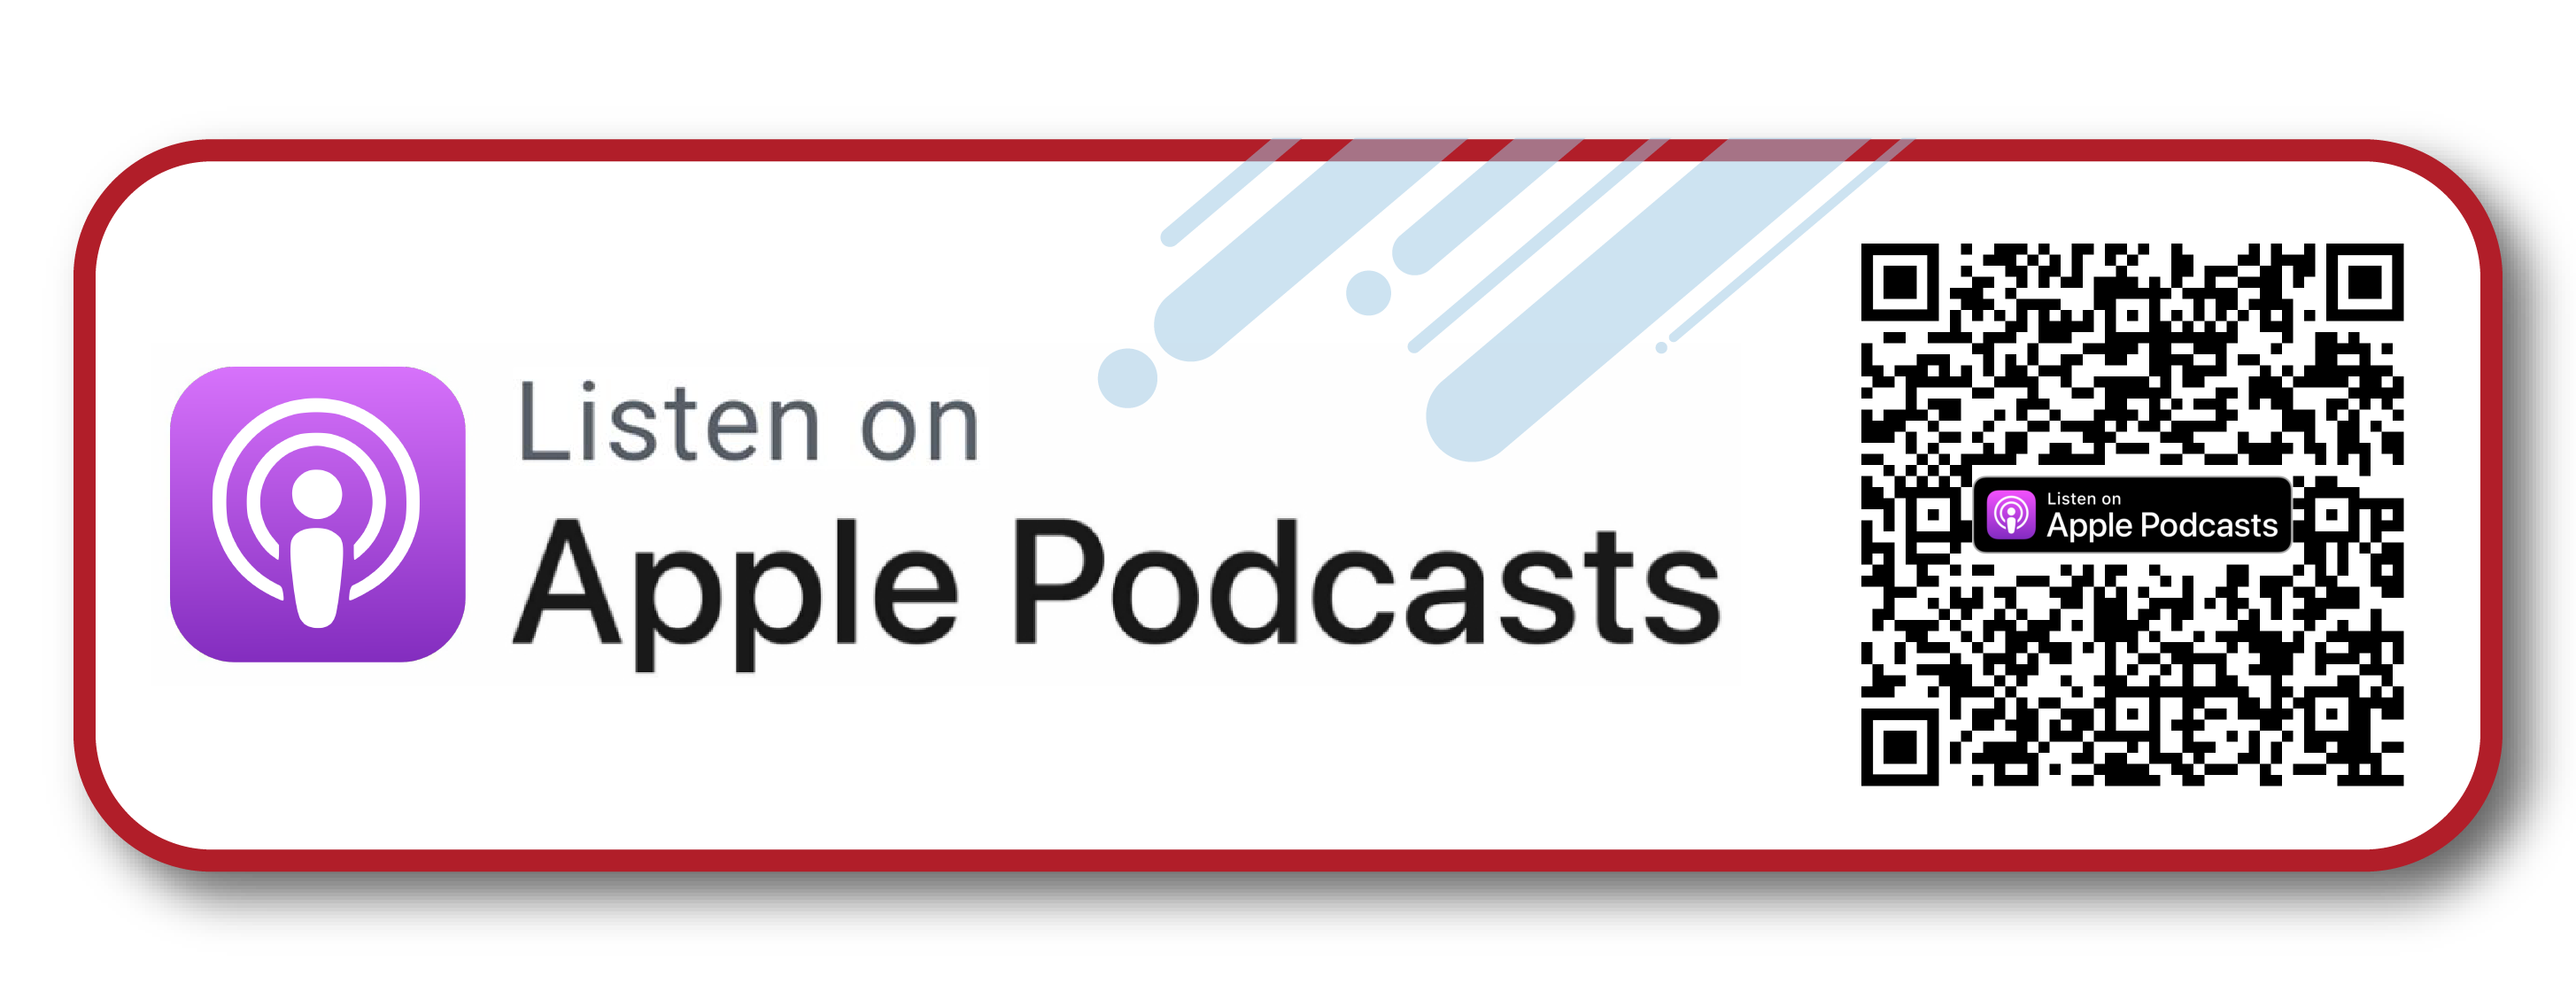 Apple_Podcasts_BT_1